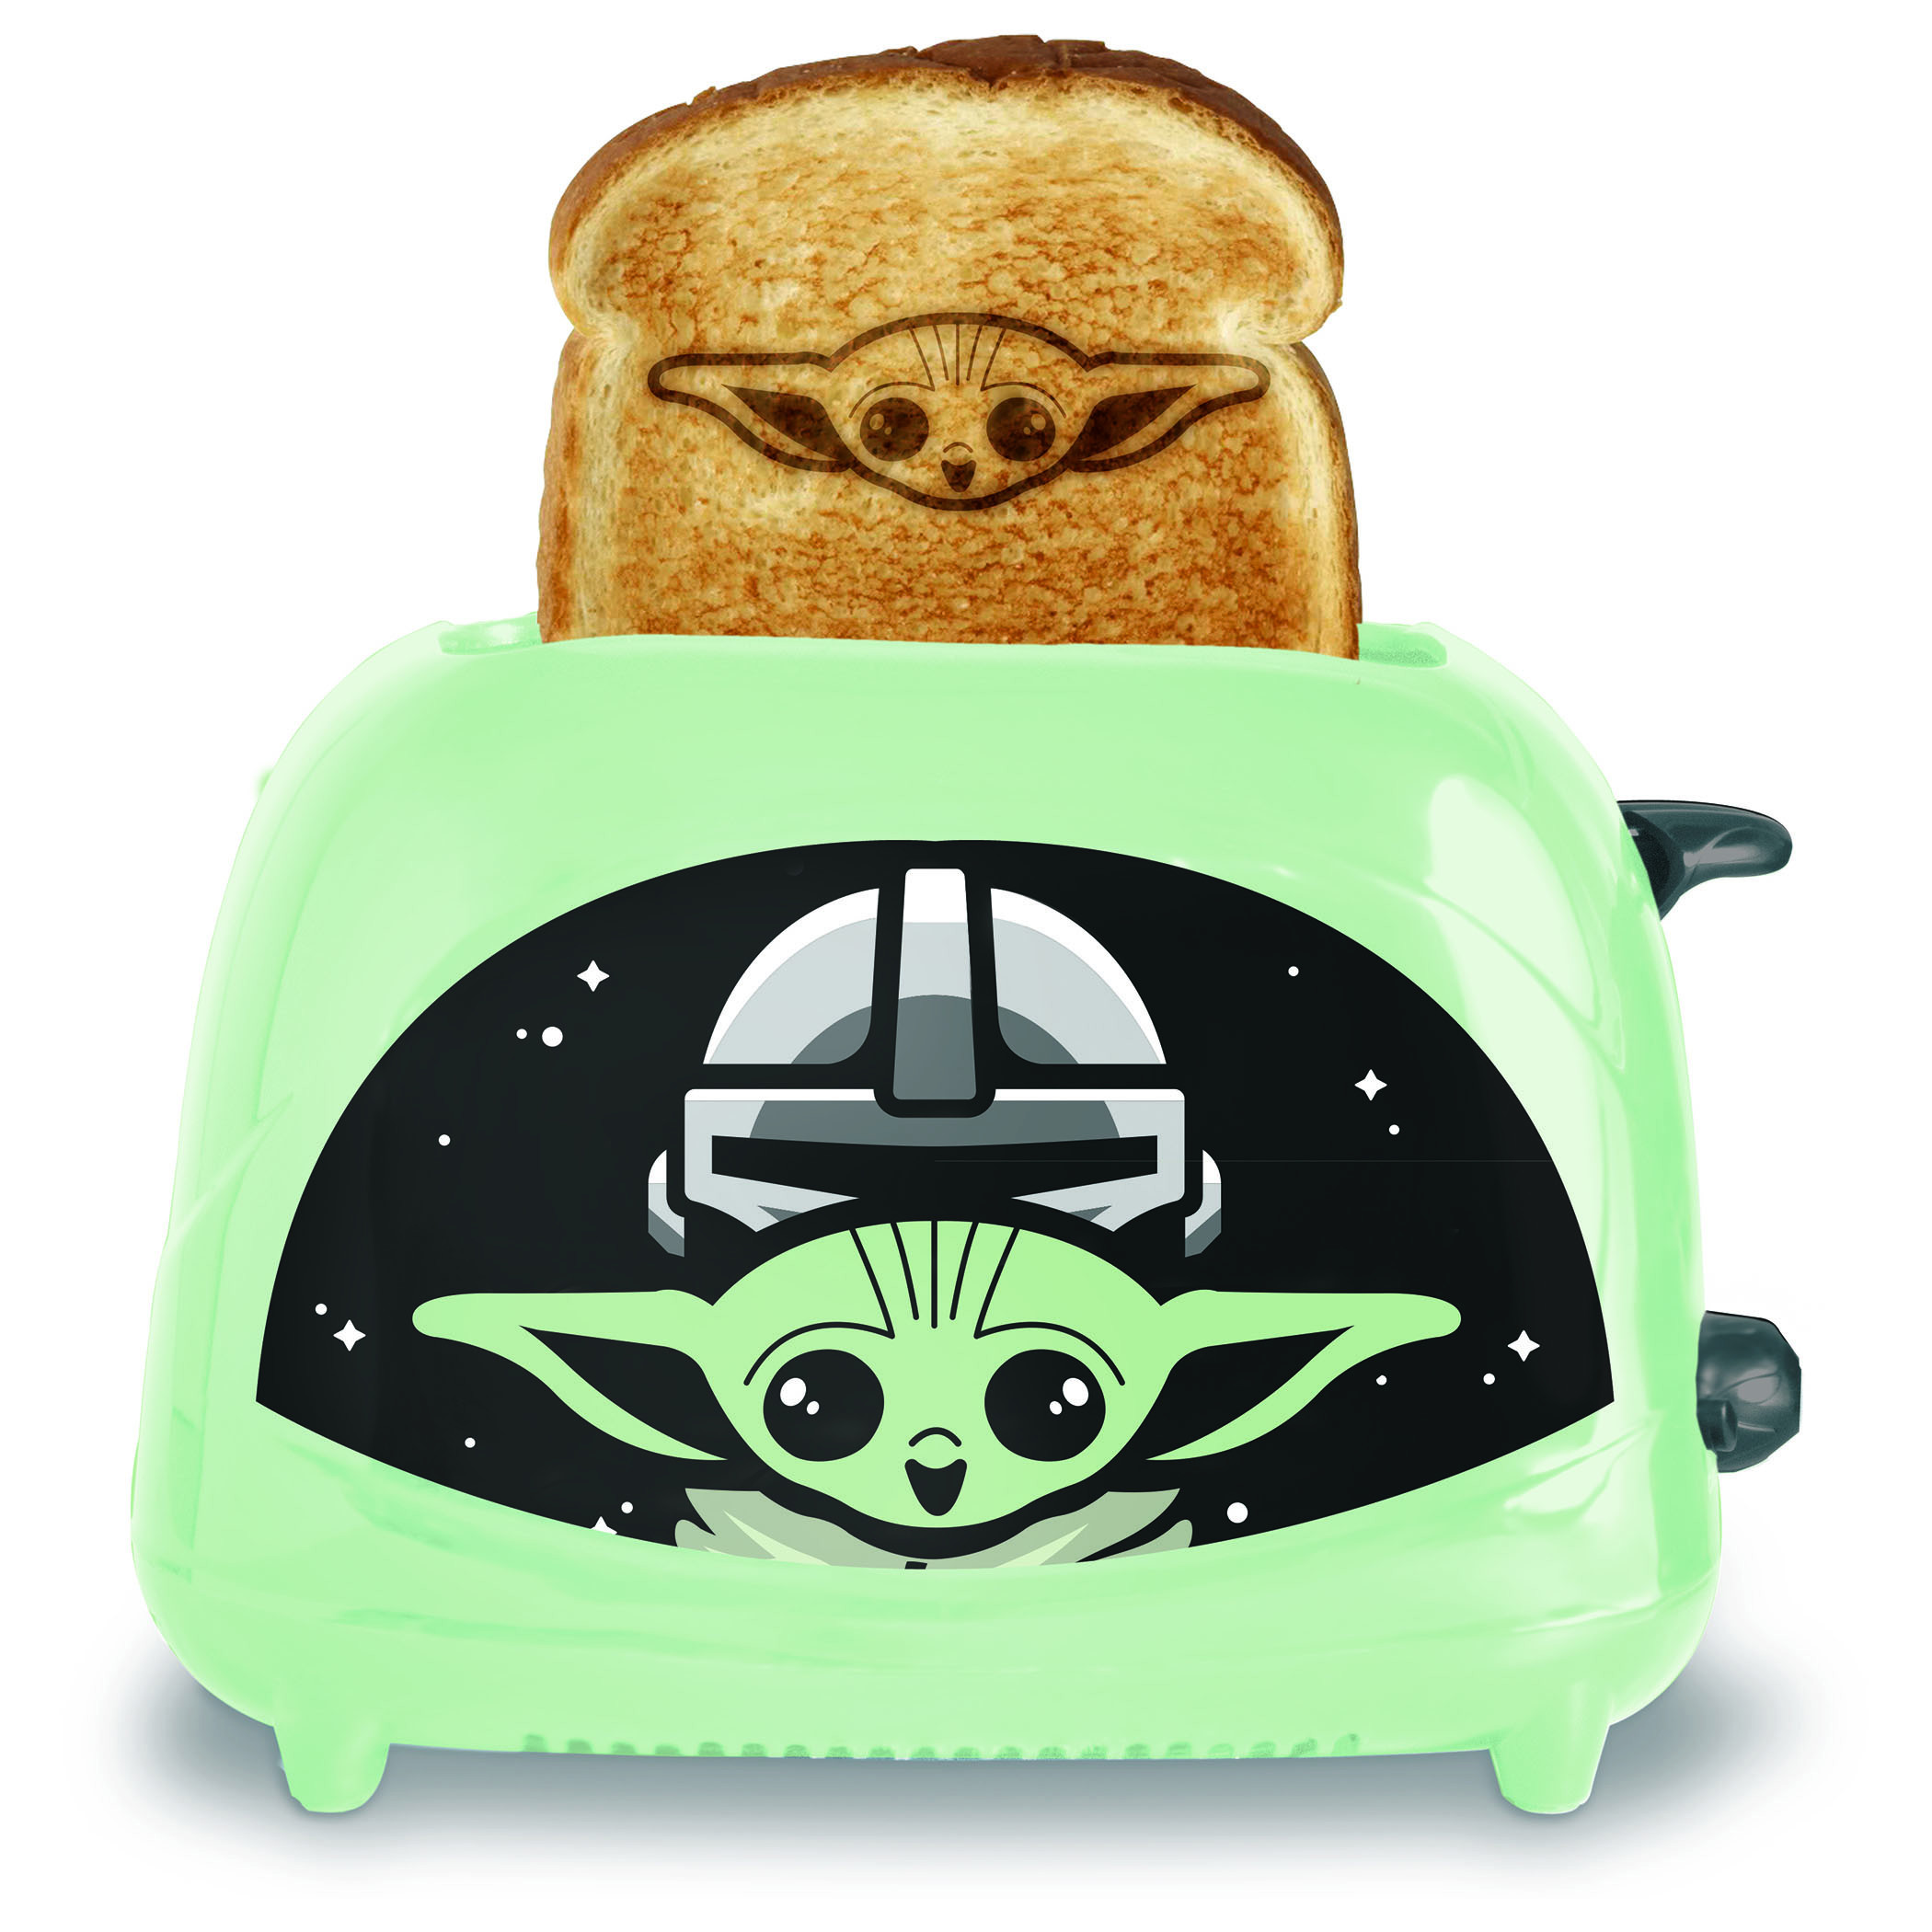 Star Wars The Mandolorian The Child Empire Toaster